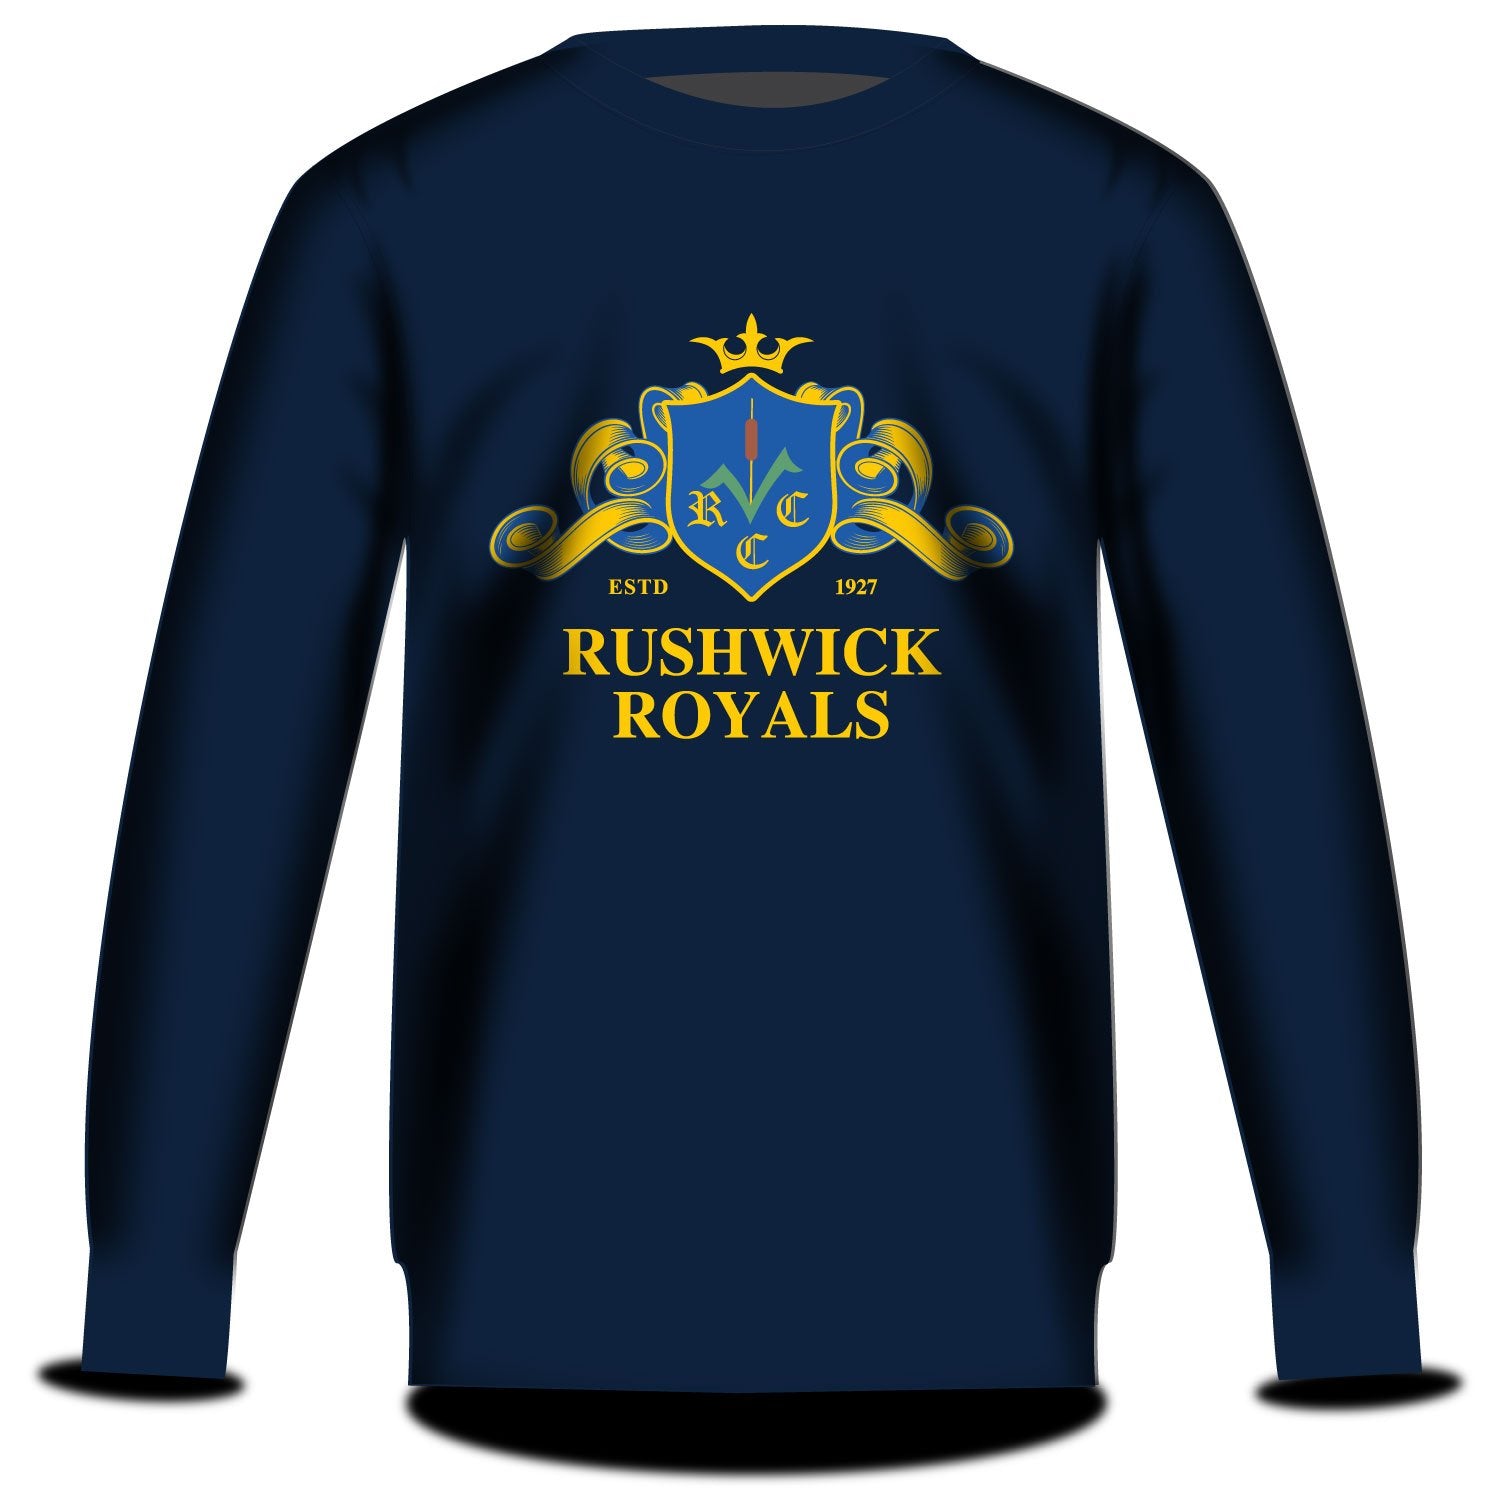 rushwick royals sweatshirt front